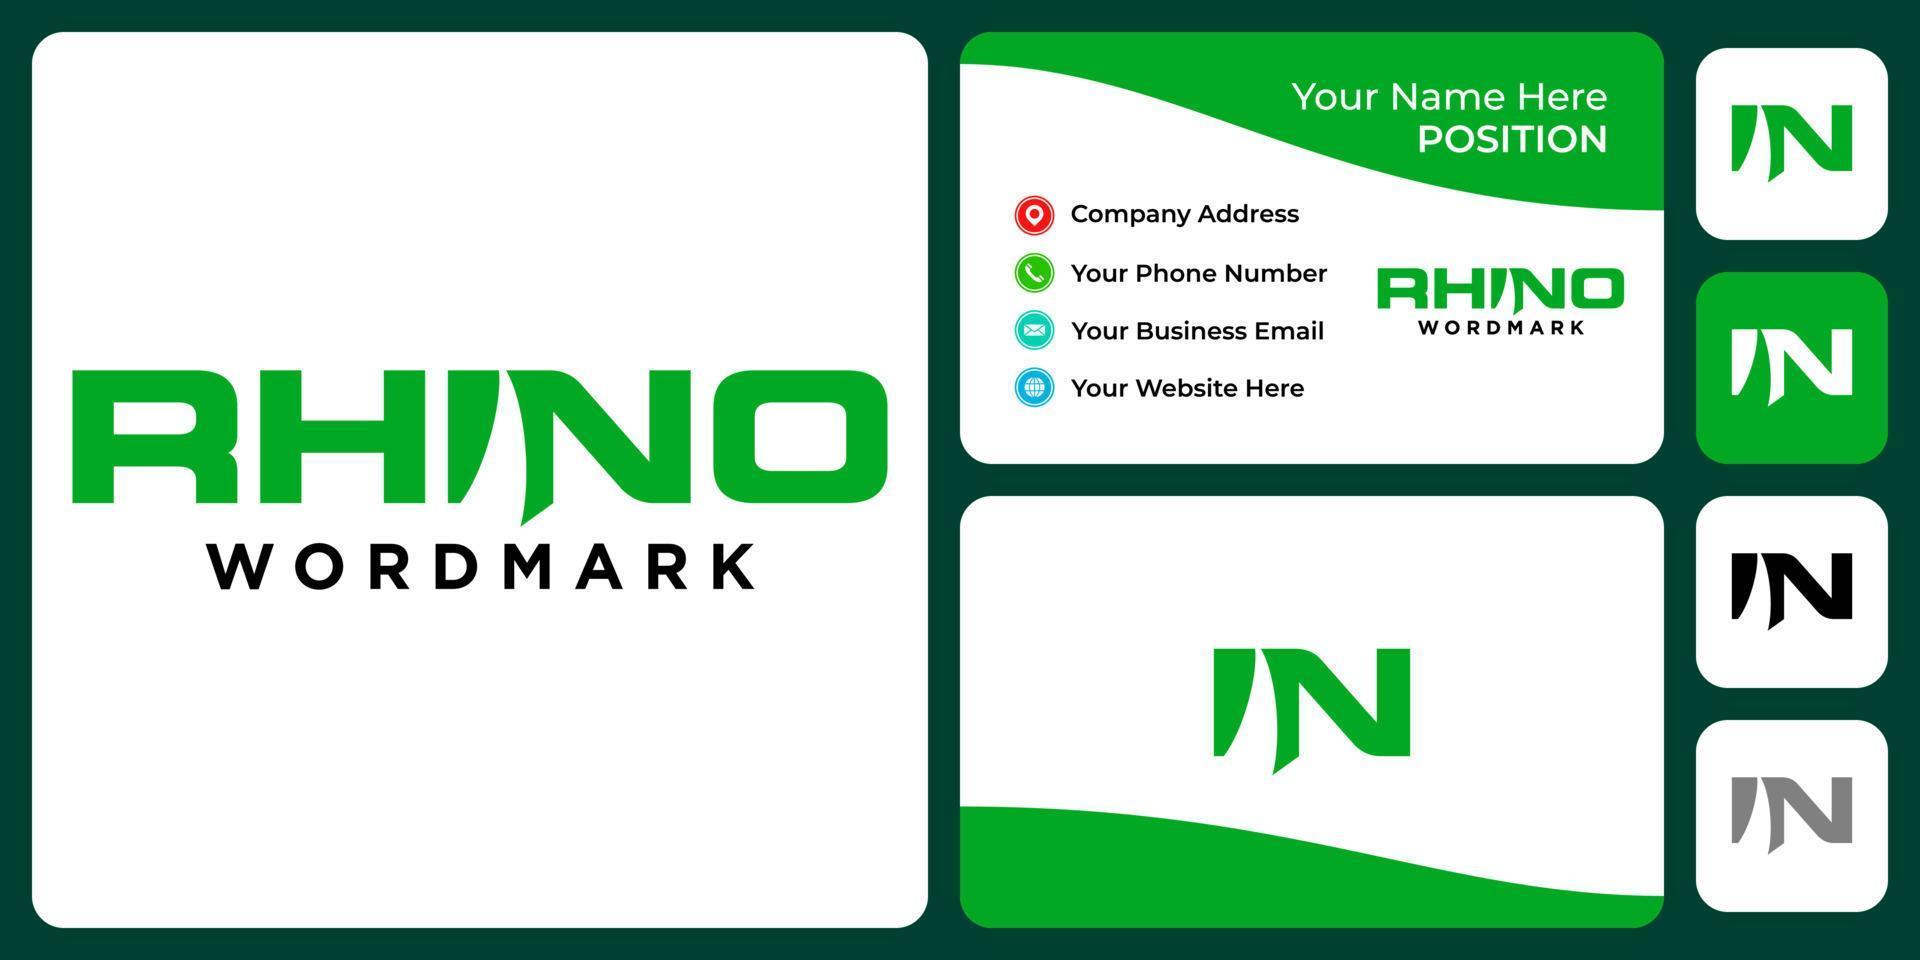 Rhino animal wordmark logo design with business card template. vector